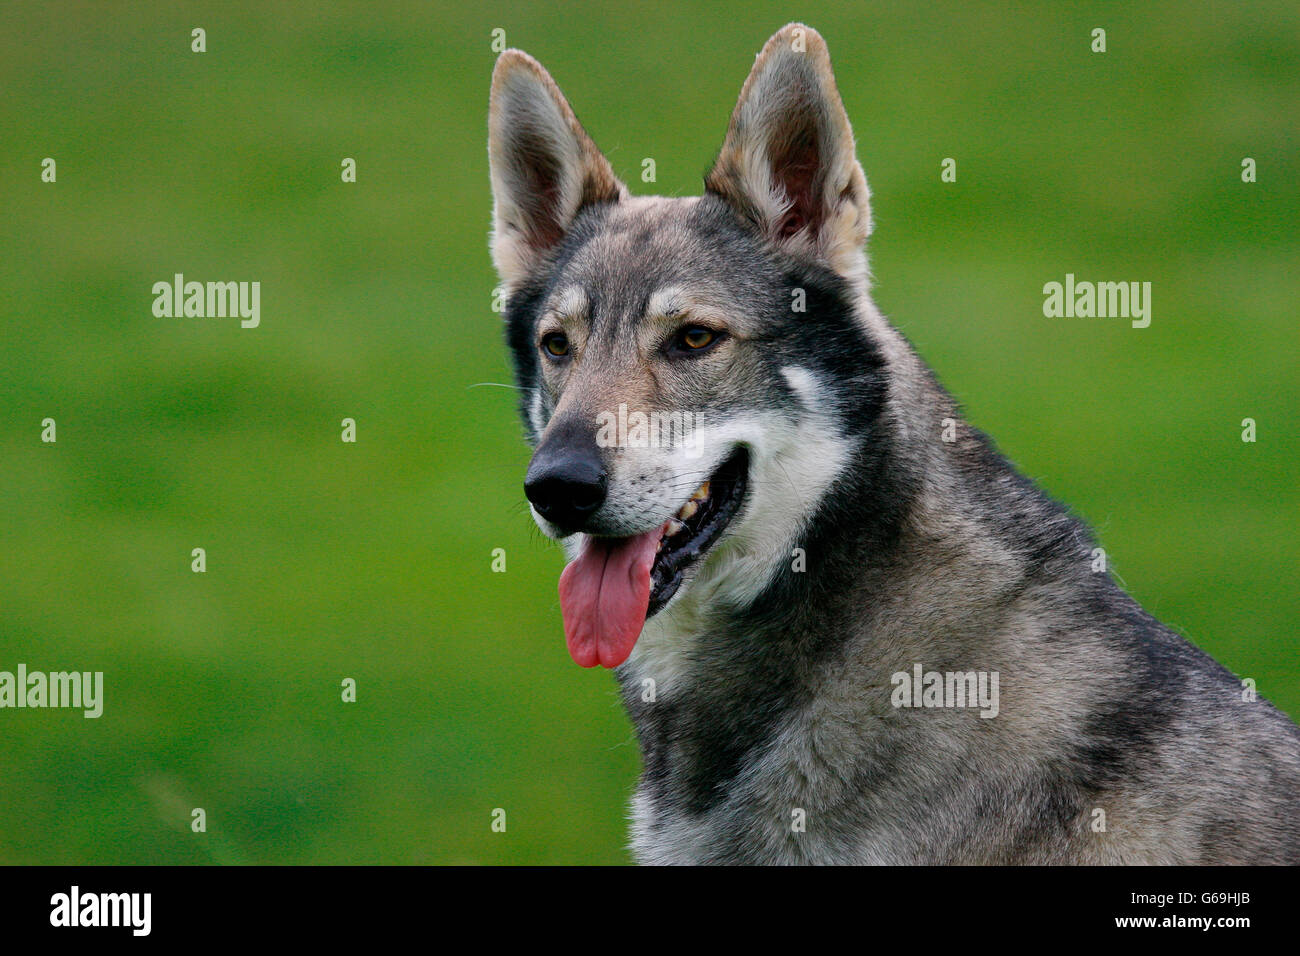 Saarloos wolfdog, Germany Stock Photo